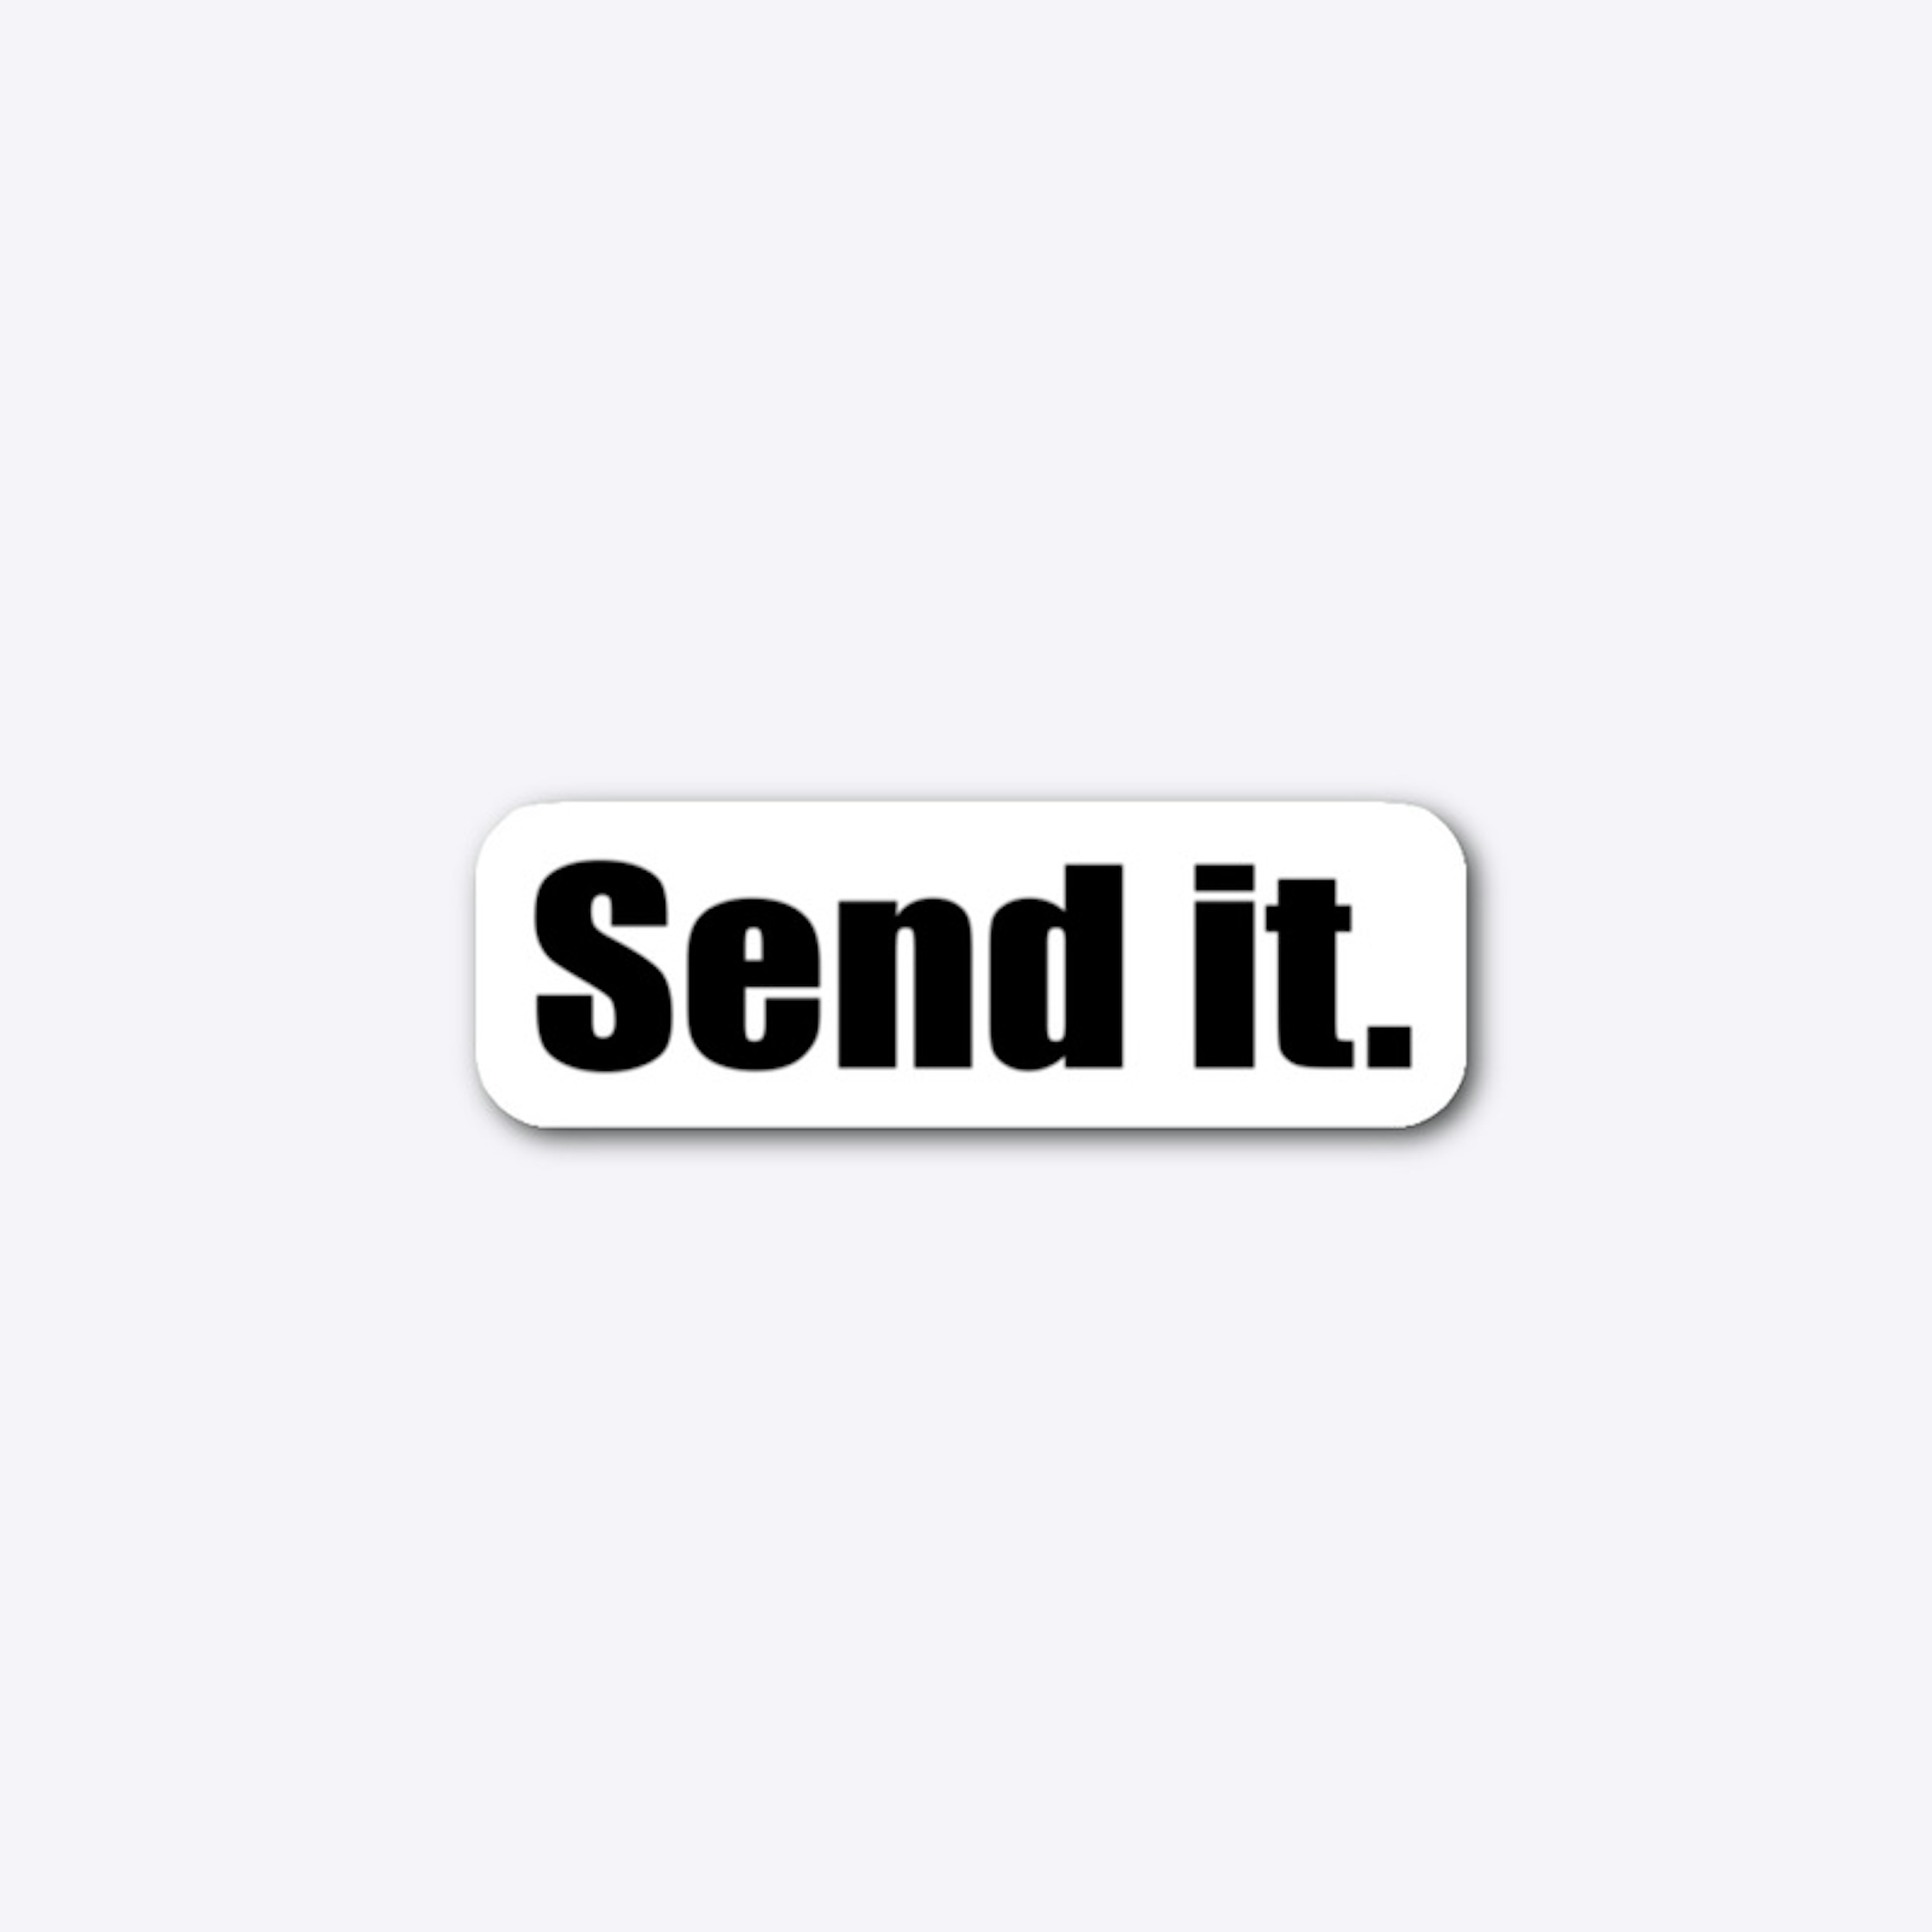 Send it Sticker